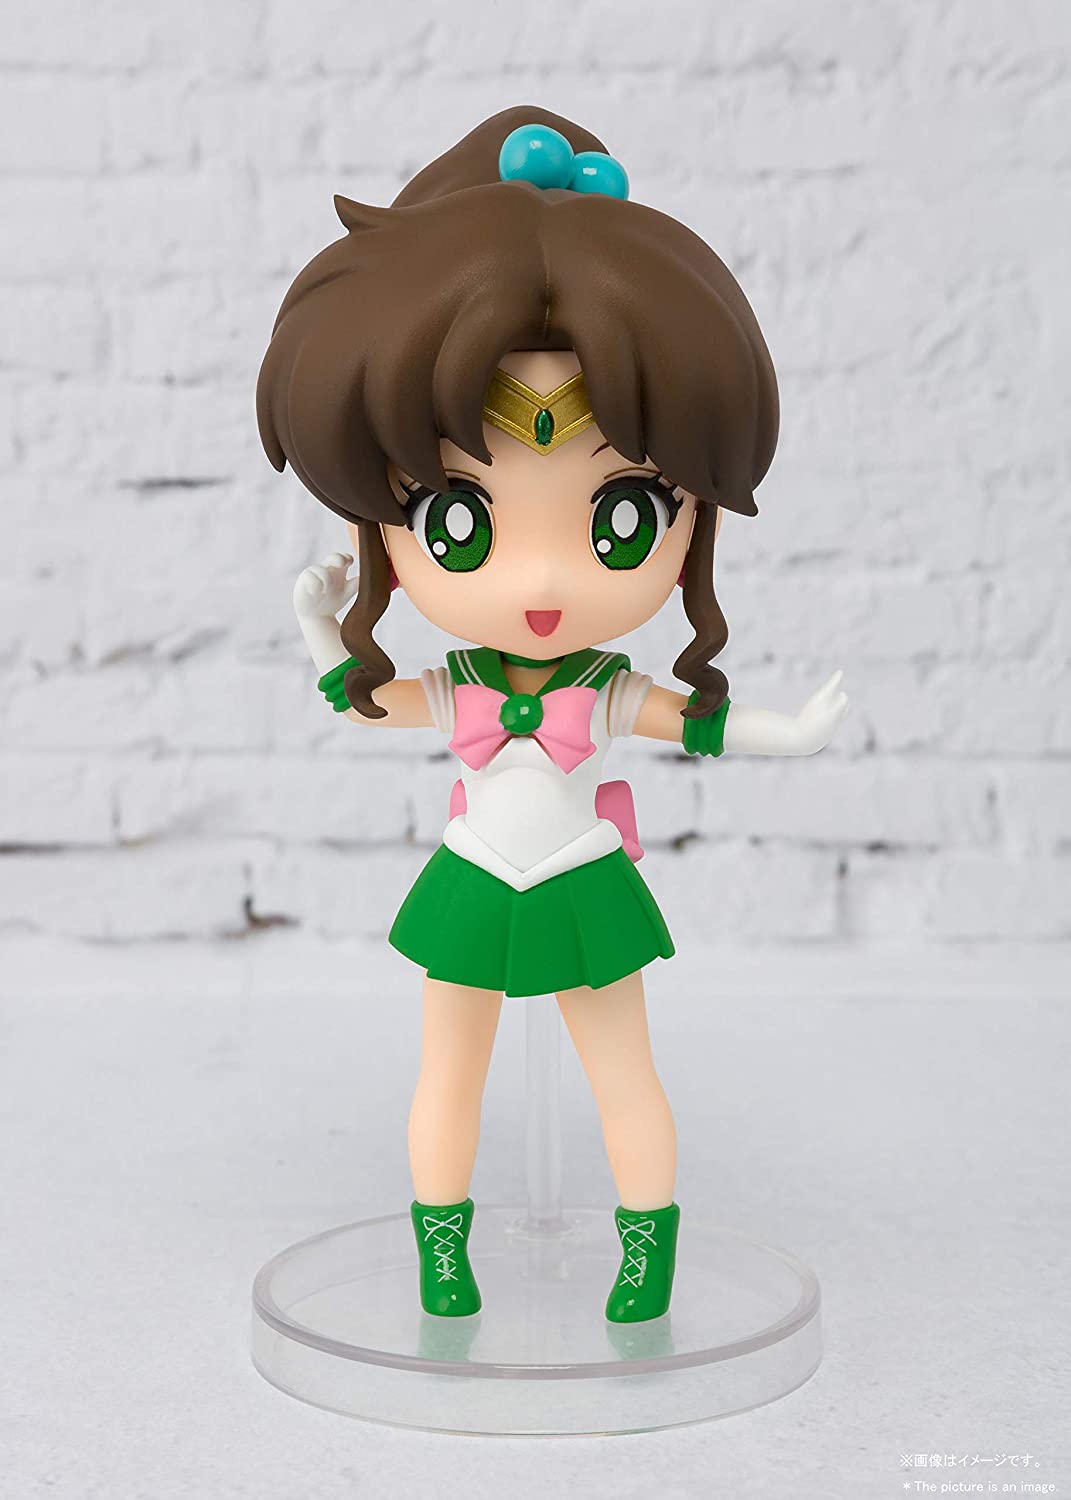 Figuarts mini Sailor Jupiter "Sailor Moon" | animota